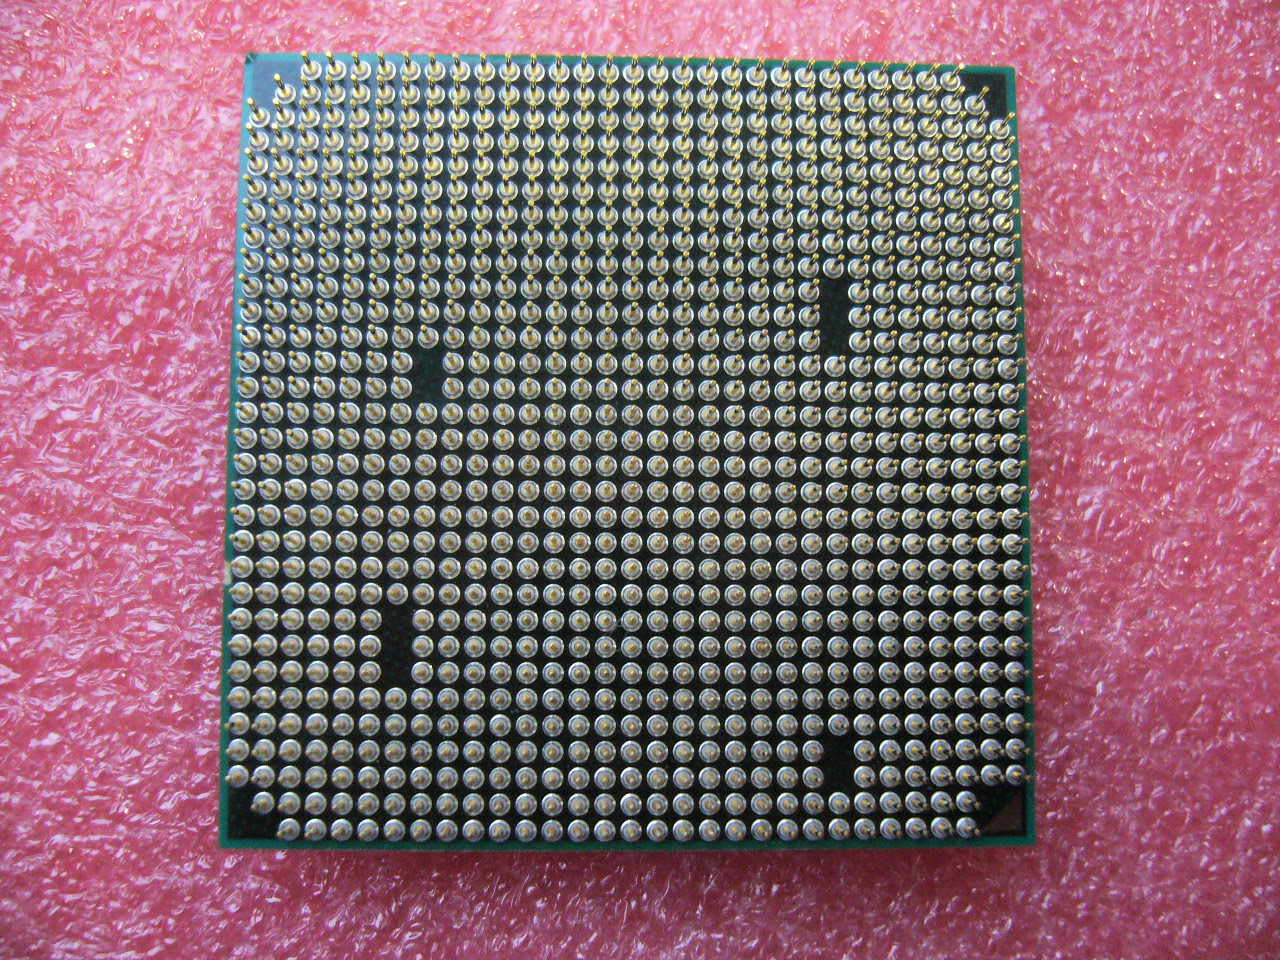 QTY 1x AMD Athlon II X2 245e 2.9 GHz Dual-Core (AD245EHDK23GM) CPU AM3 45W - Click Image to Close